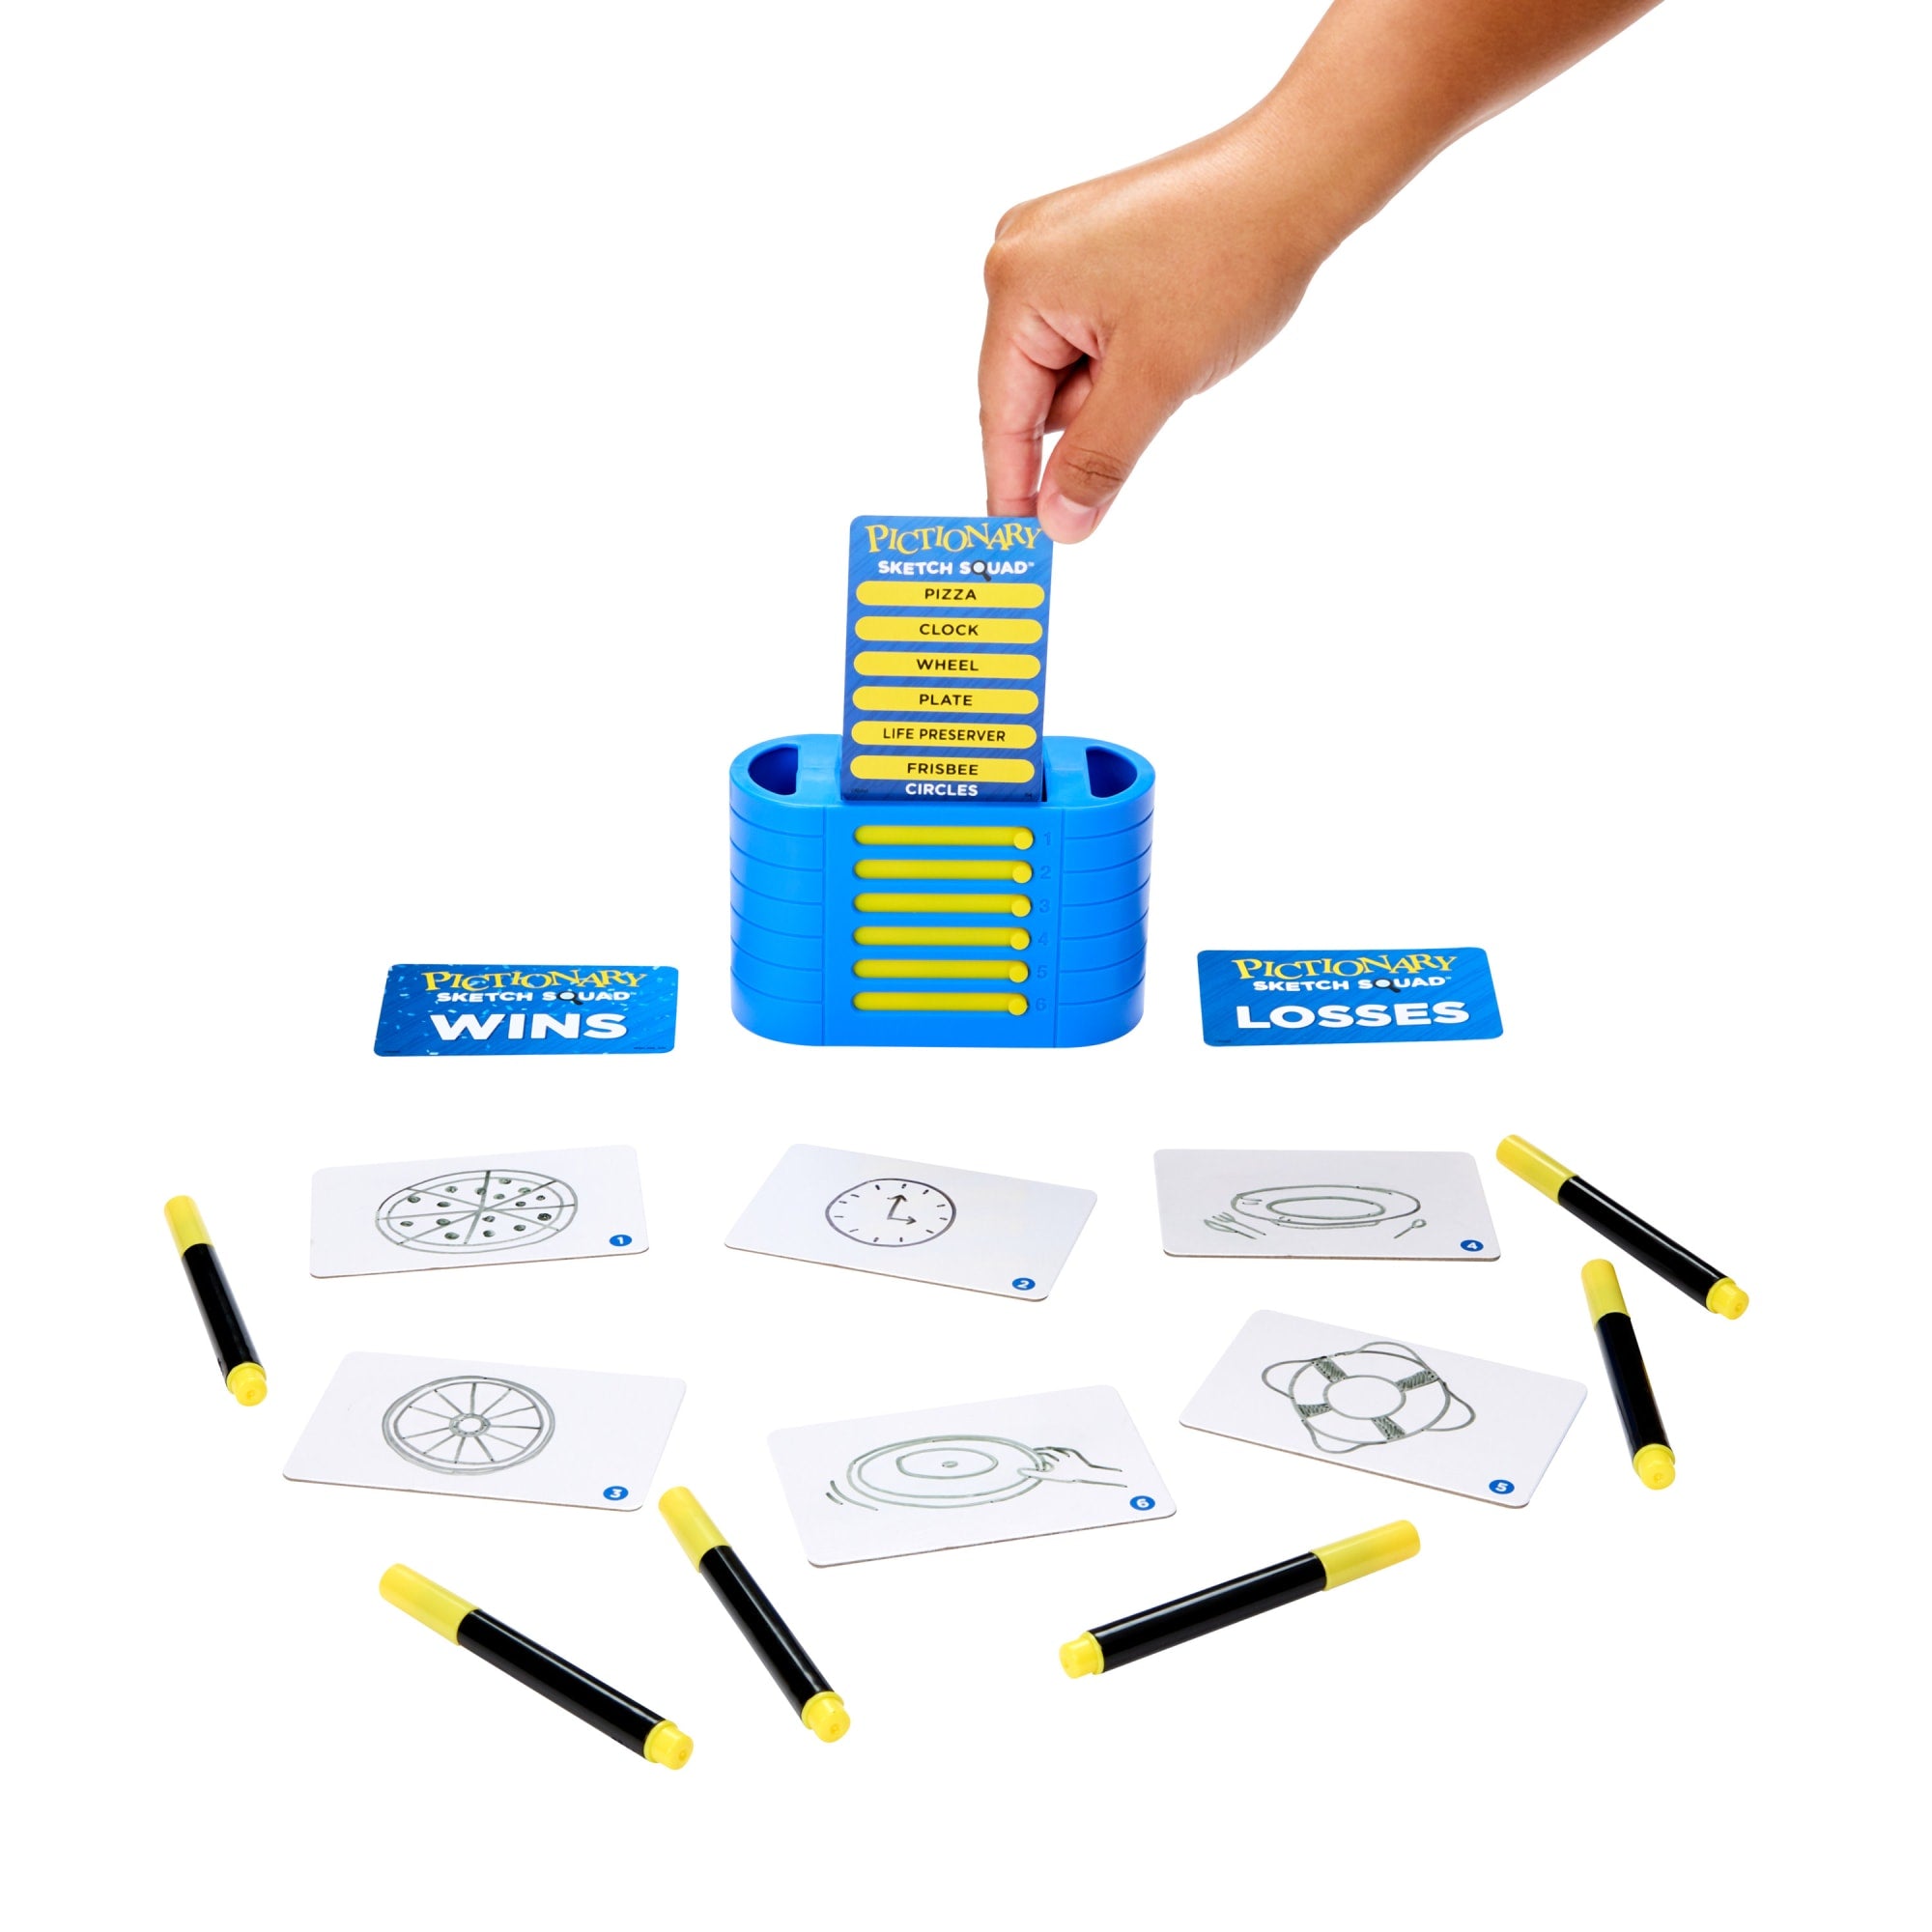 Pictionary Sketchbook x Inktober – Mattel Creations